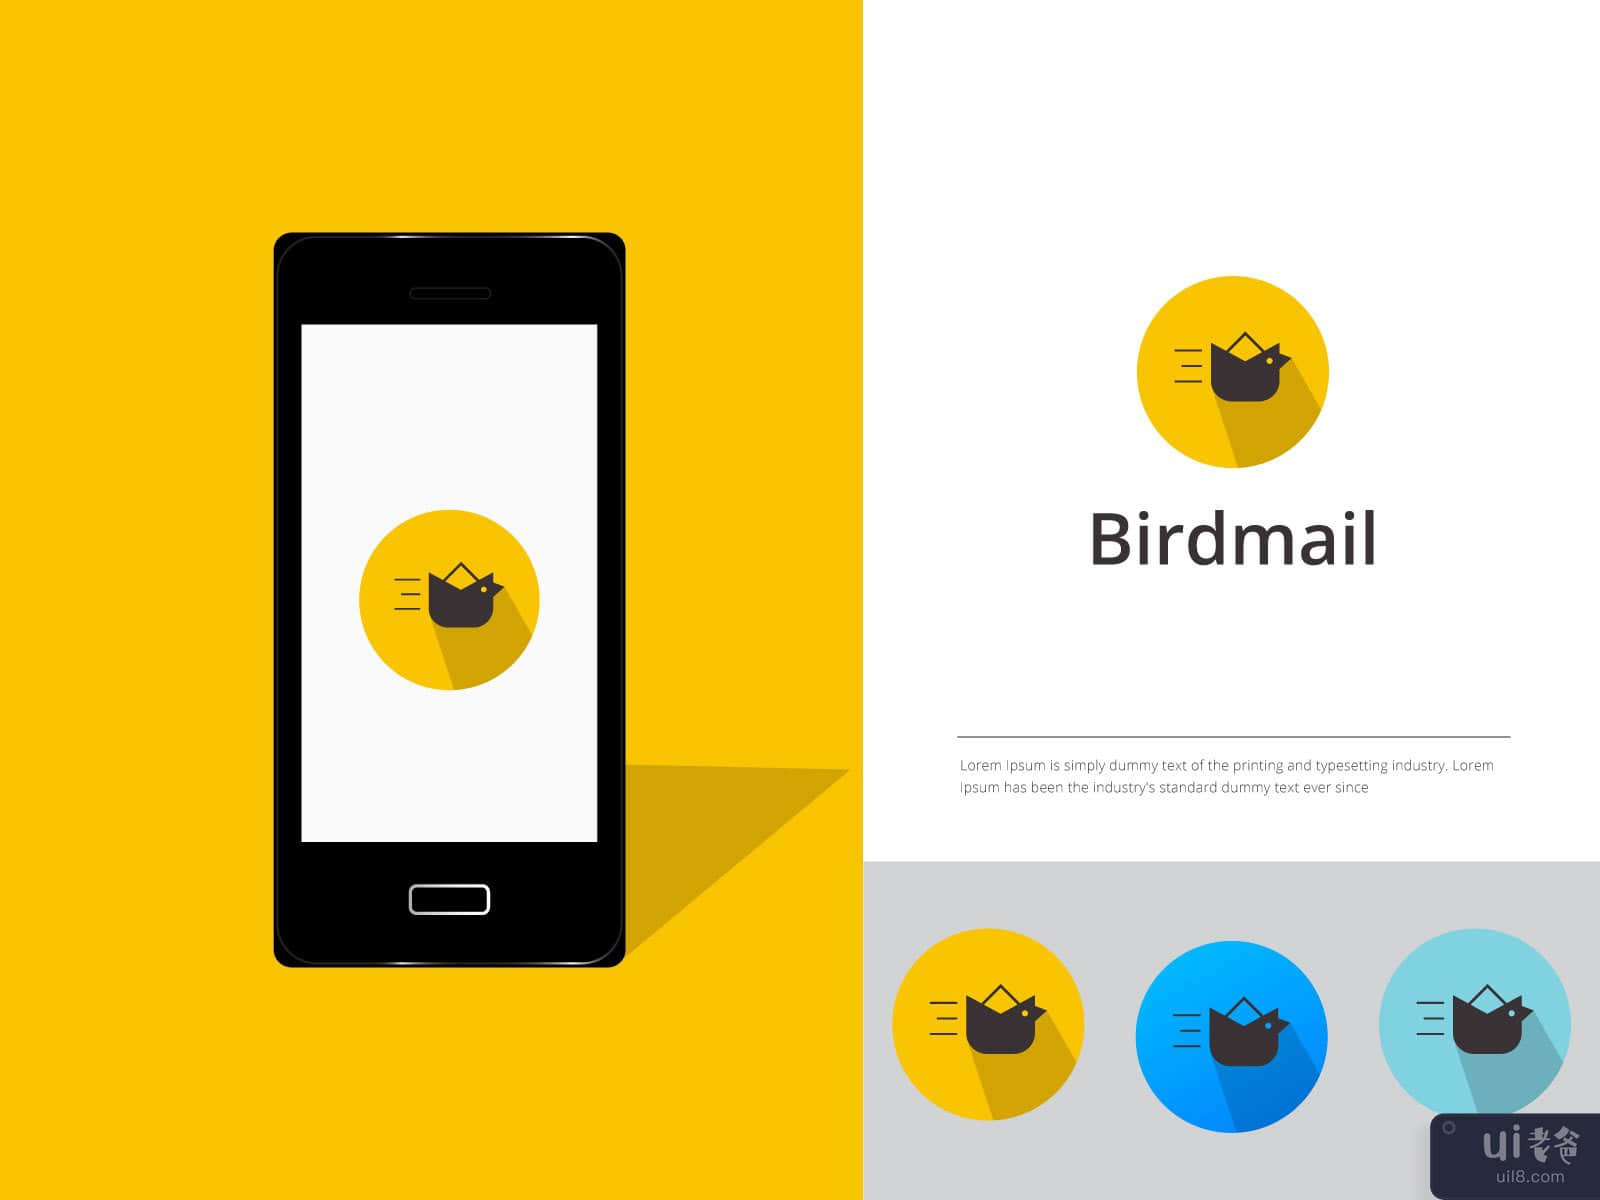 Bird Mail Logo